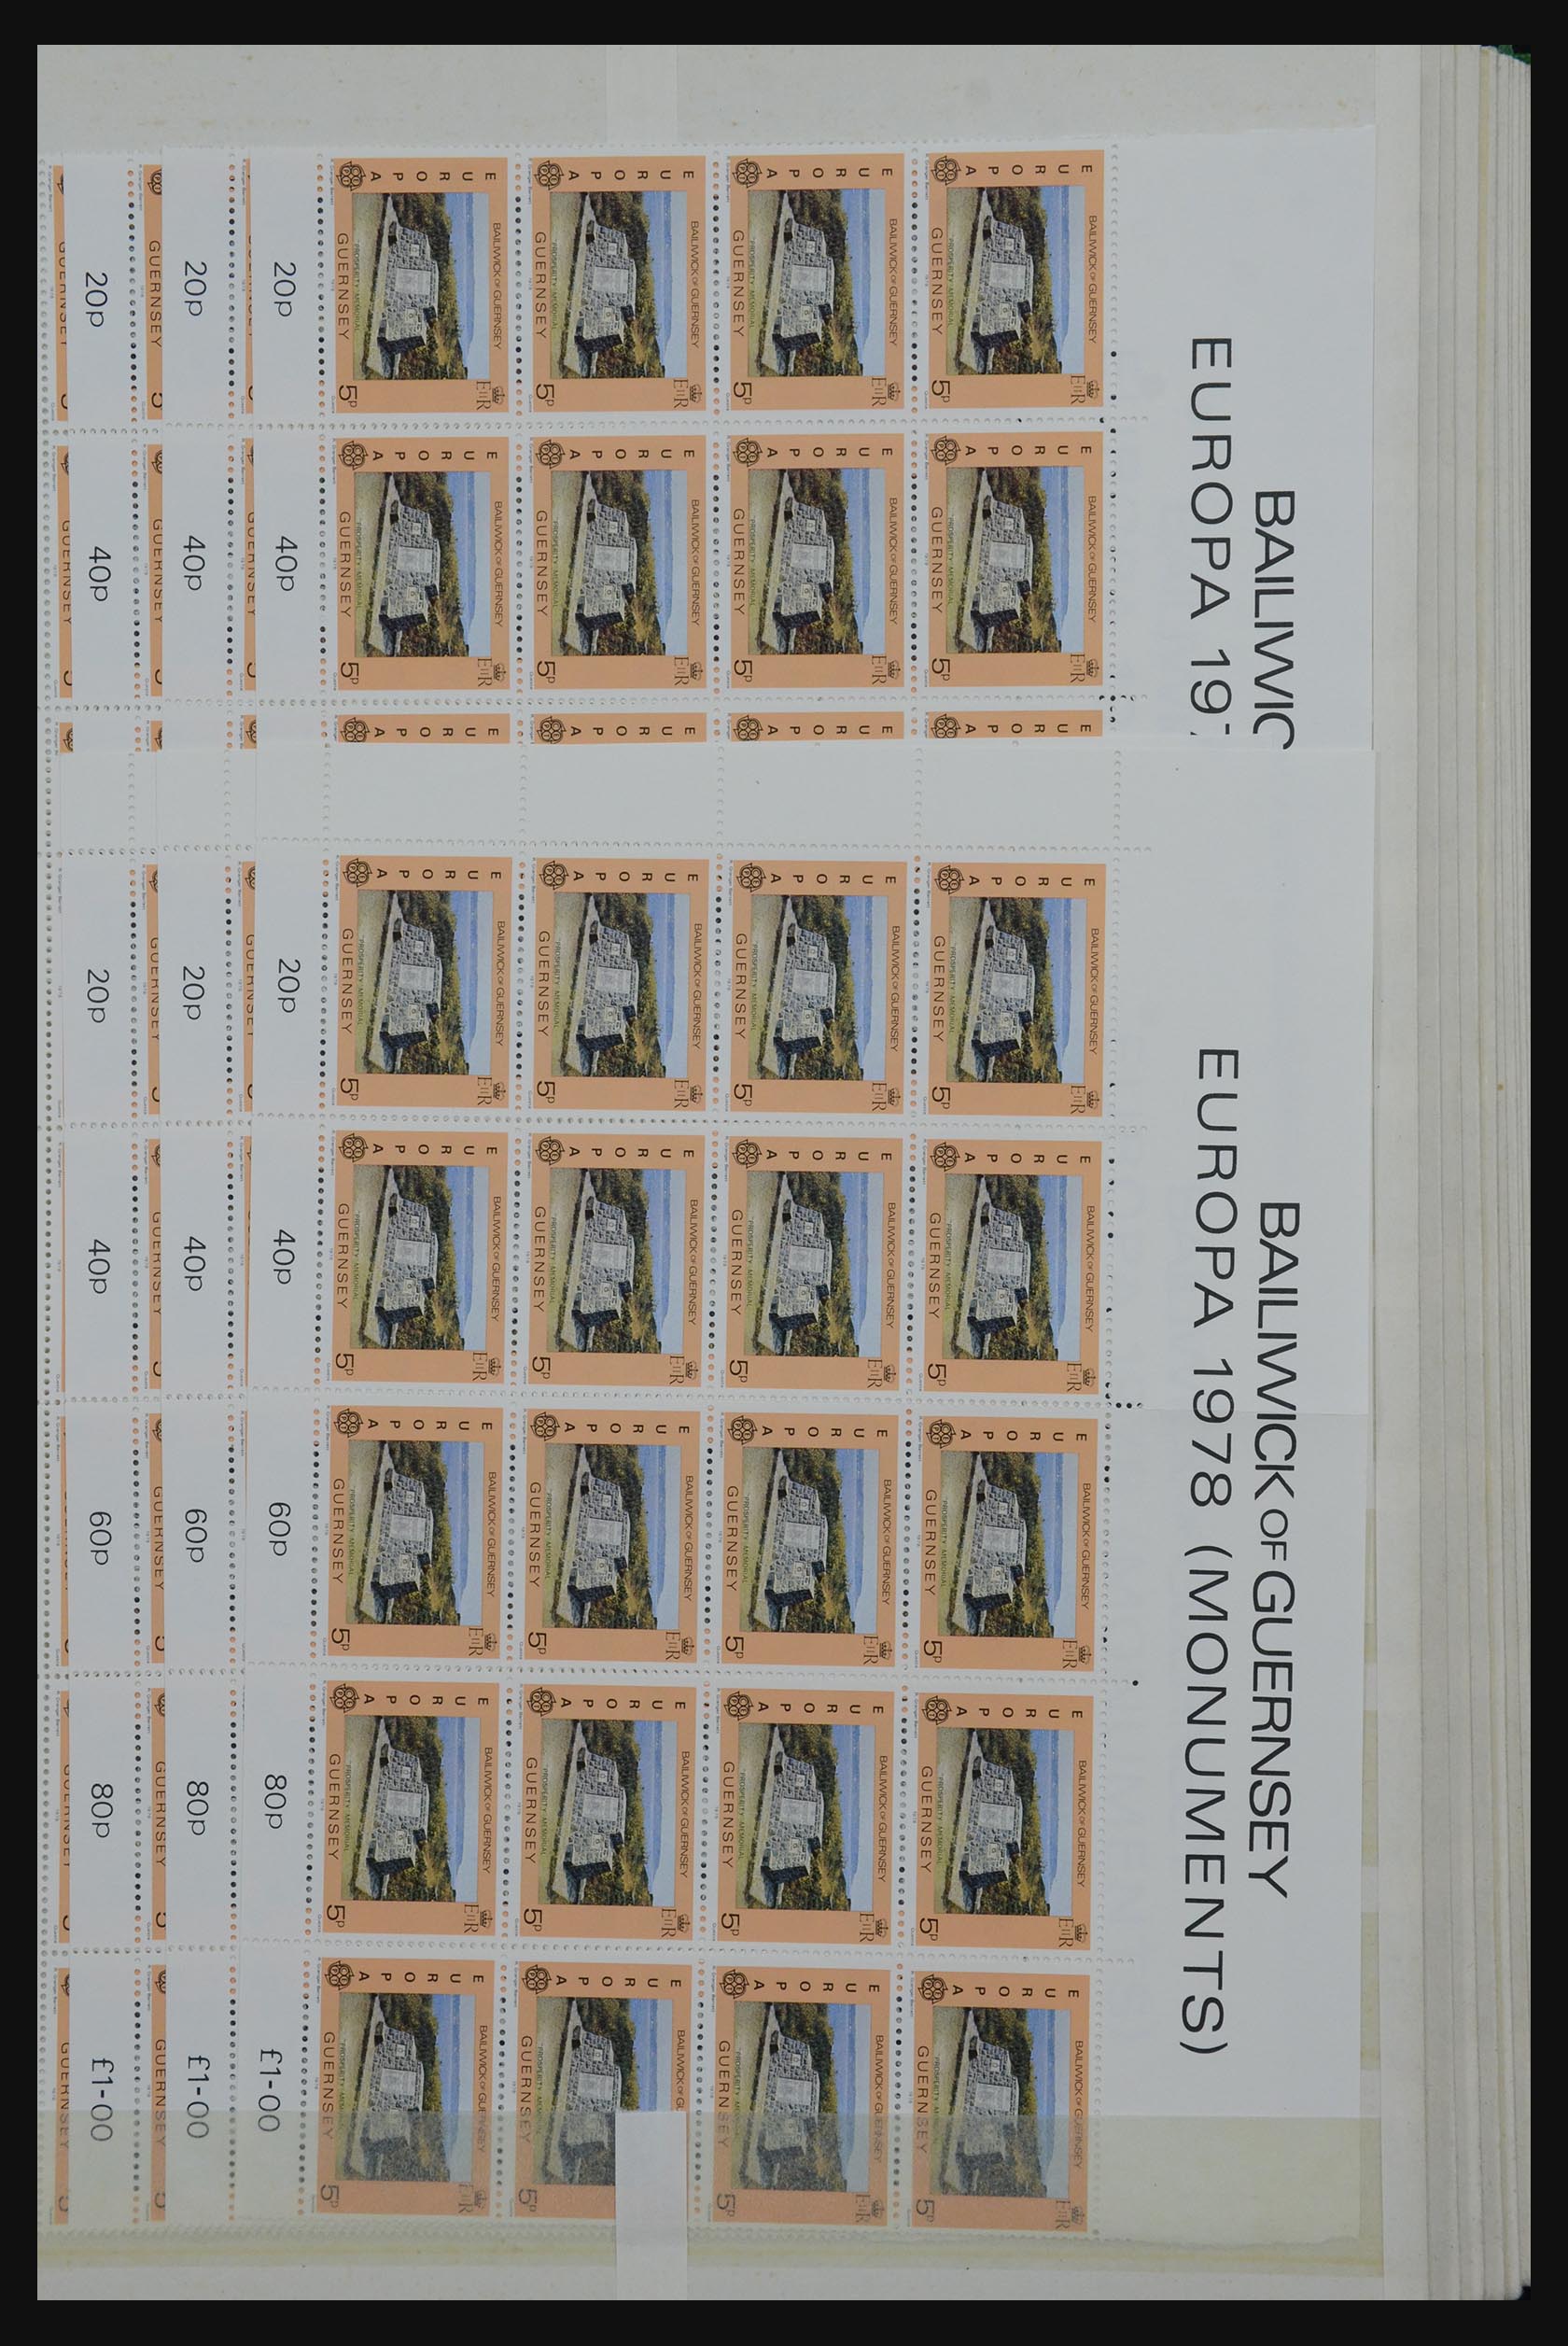 32180 029 - 32180 Guernsey 1972-1992.